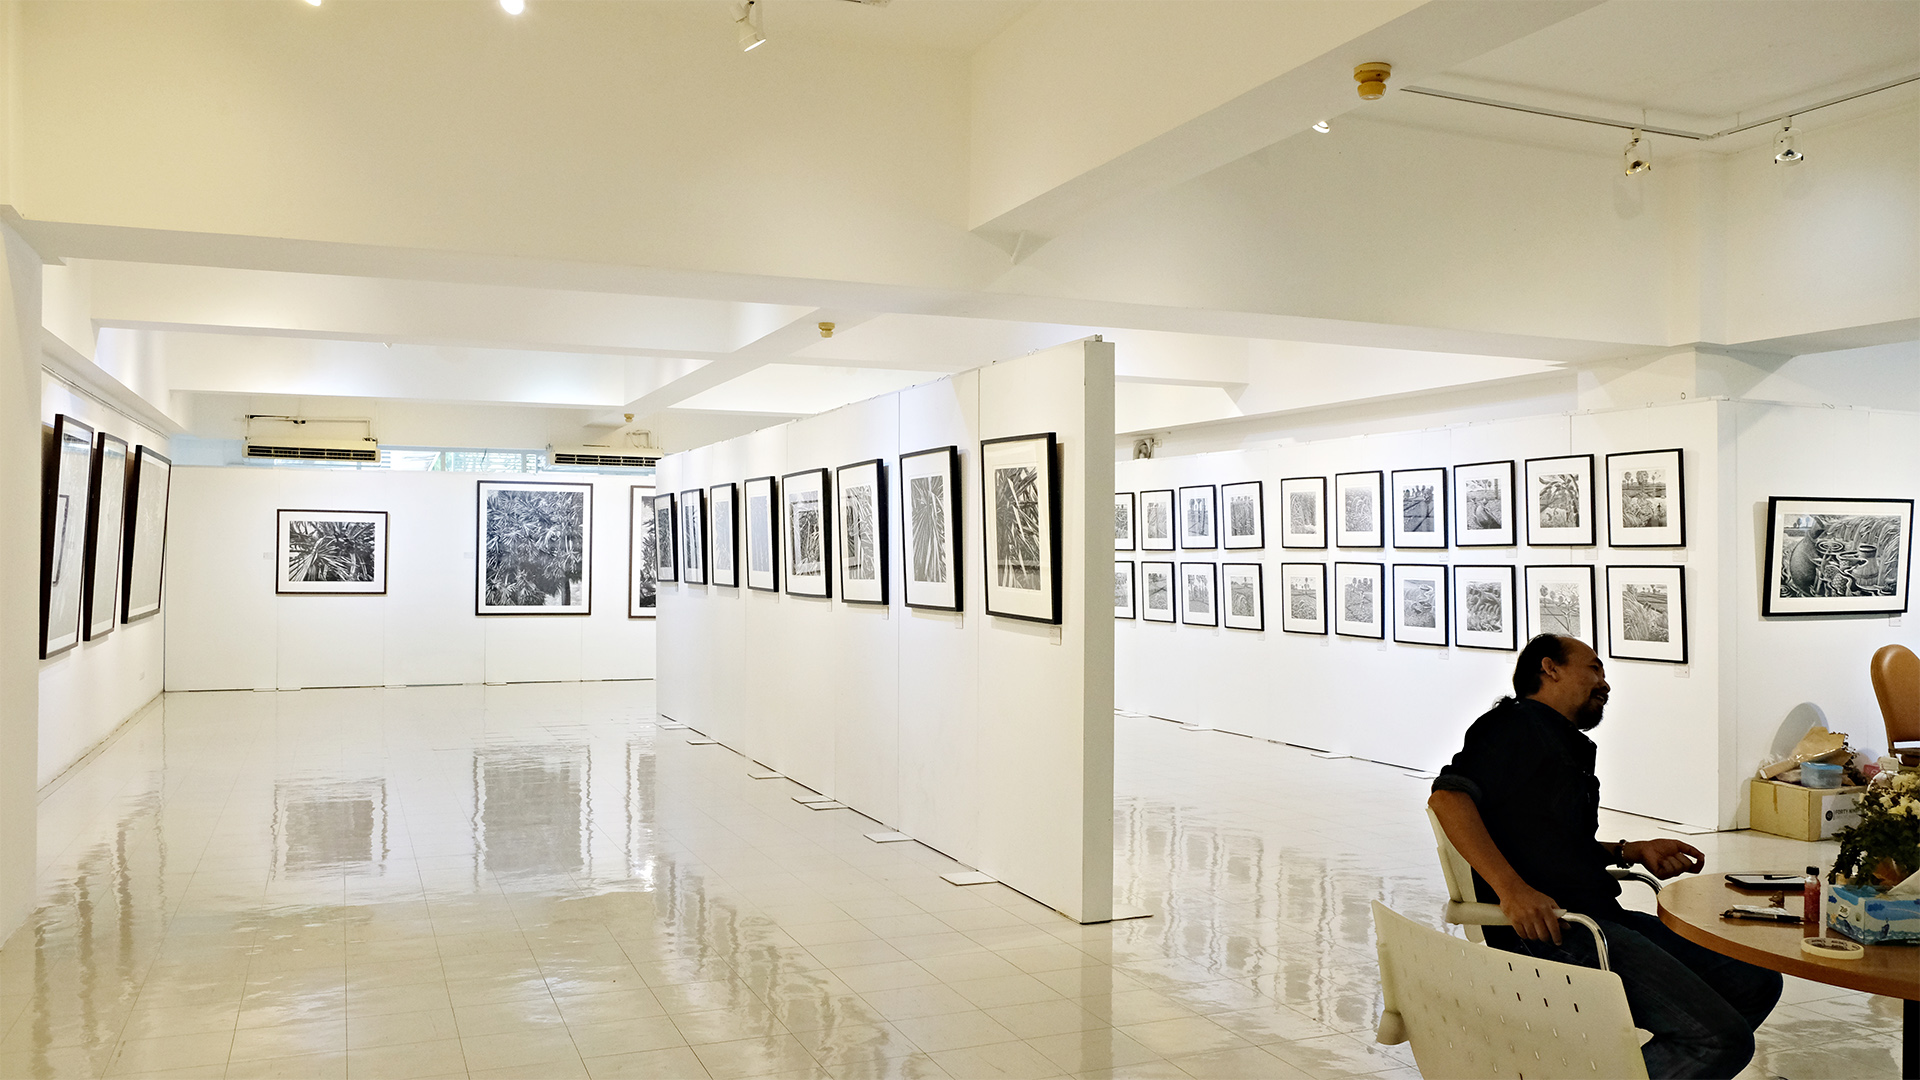 MAGIC FIELD Exhibitions By Monthian Yangthong | นิทรรศการมนตราแห่งท้องทุ่ง โดย มณเฑียร ยางทอง